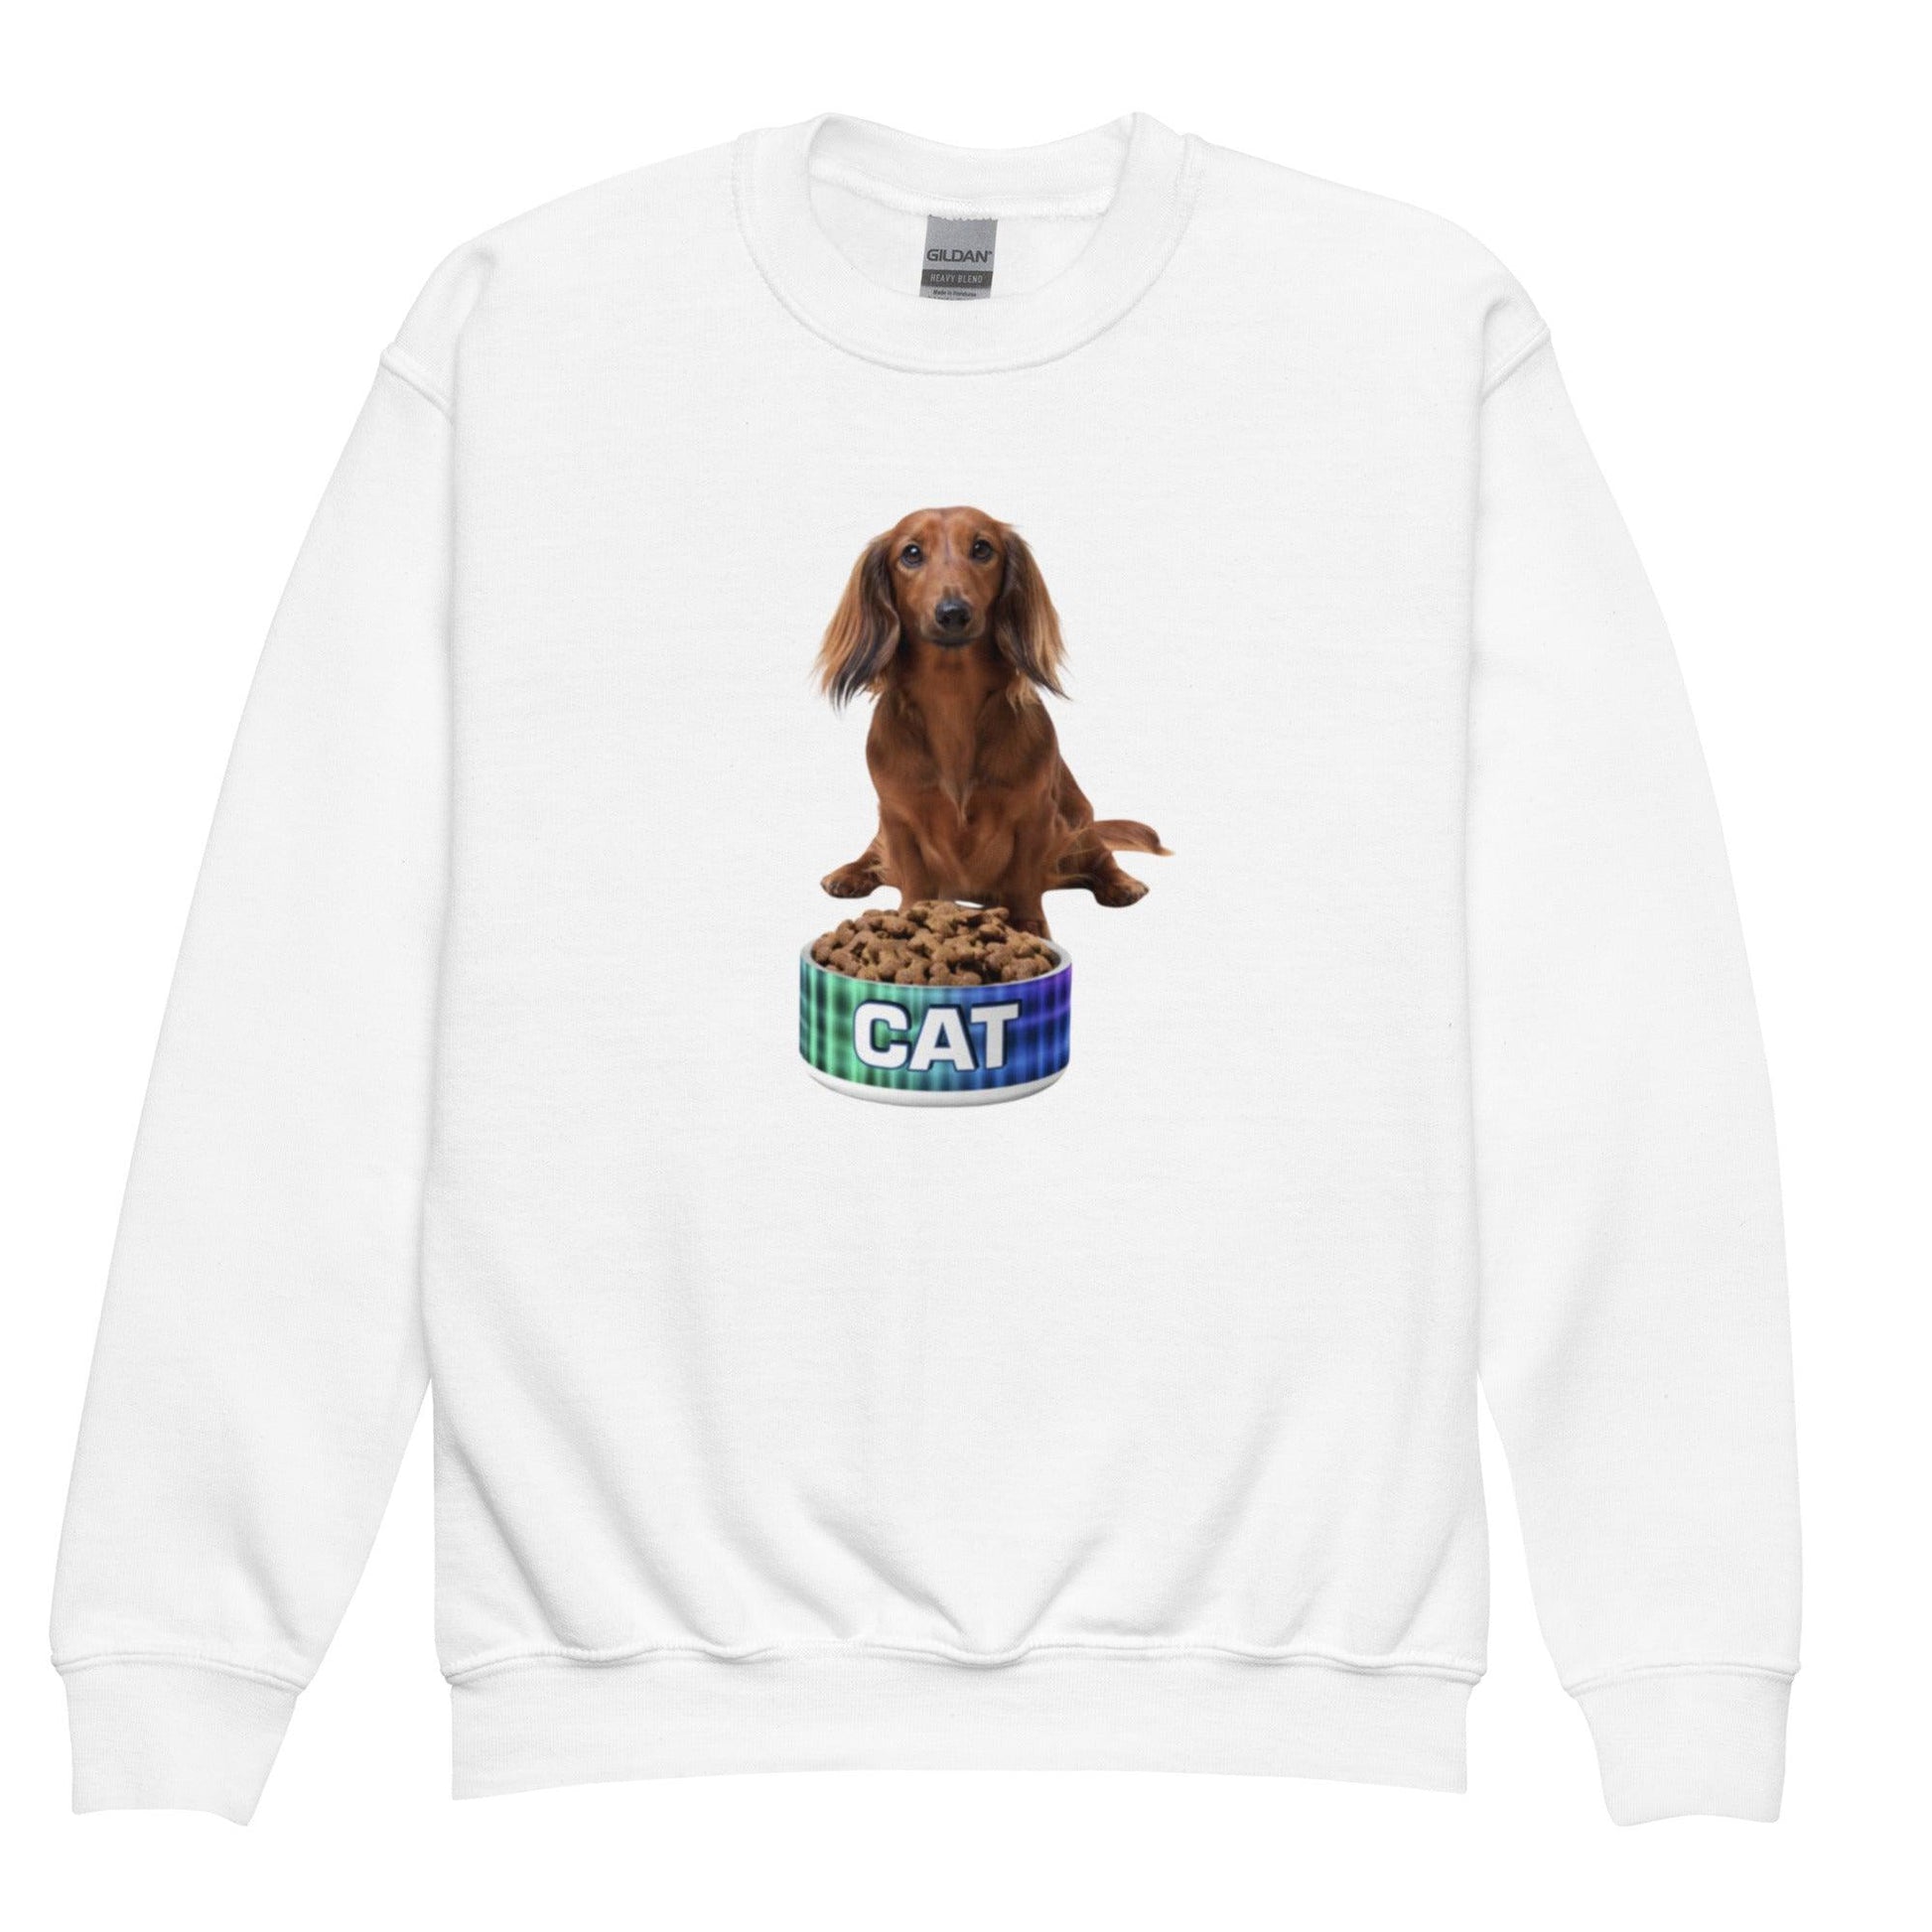 Dog With A Cat Bowl! Youth crewneck sweatshirt - Lizard Vigilante